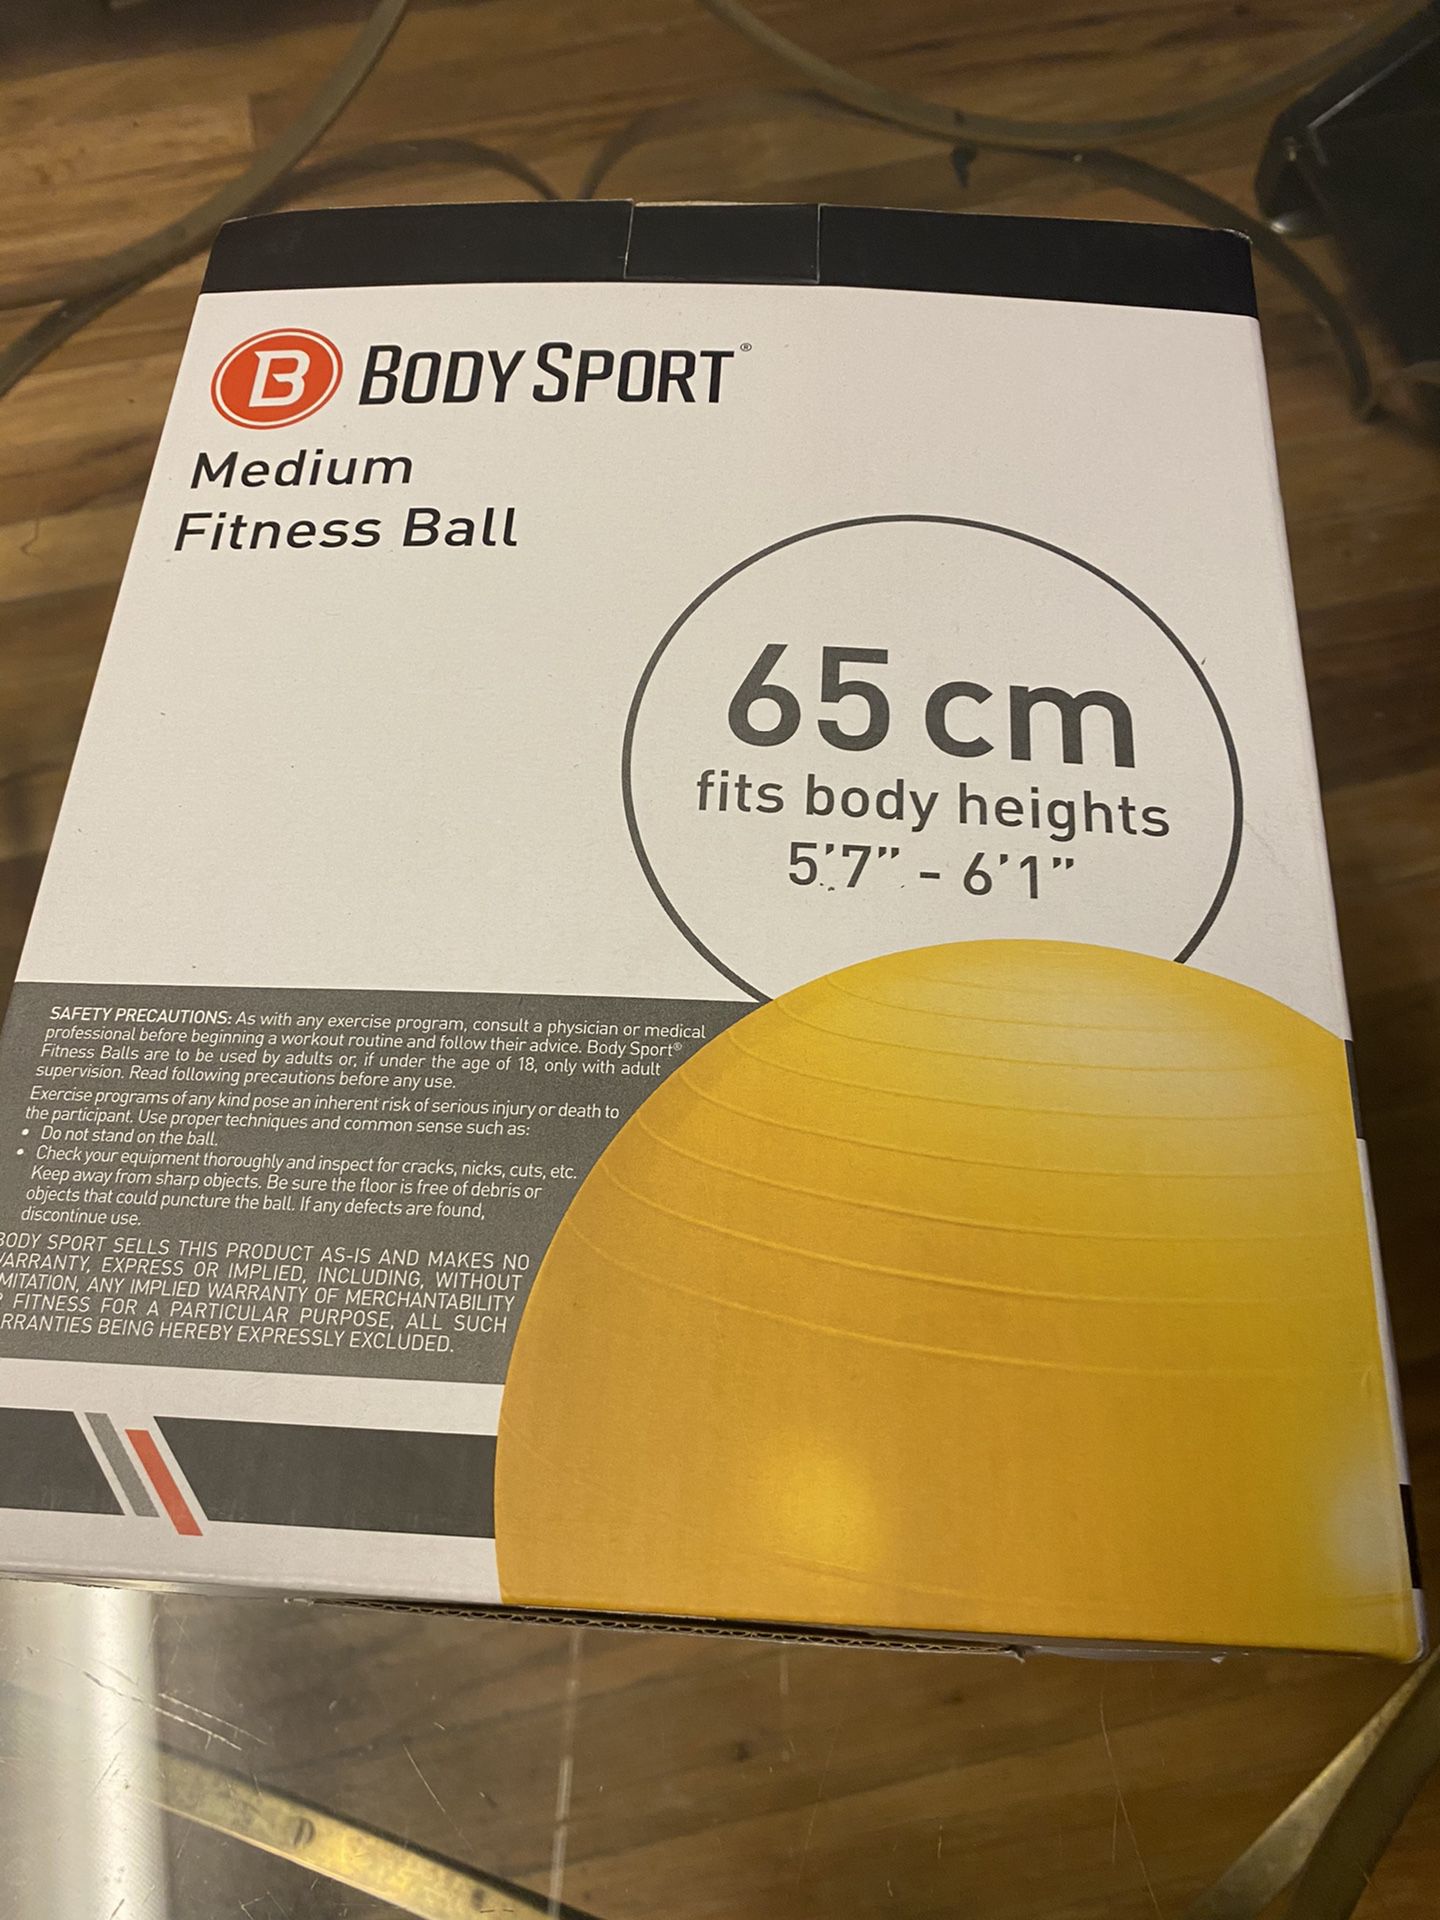 Body Sport Medium Fitness Ball 65cm fits 5’7”-6’1”